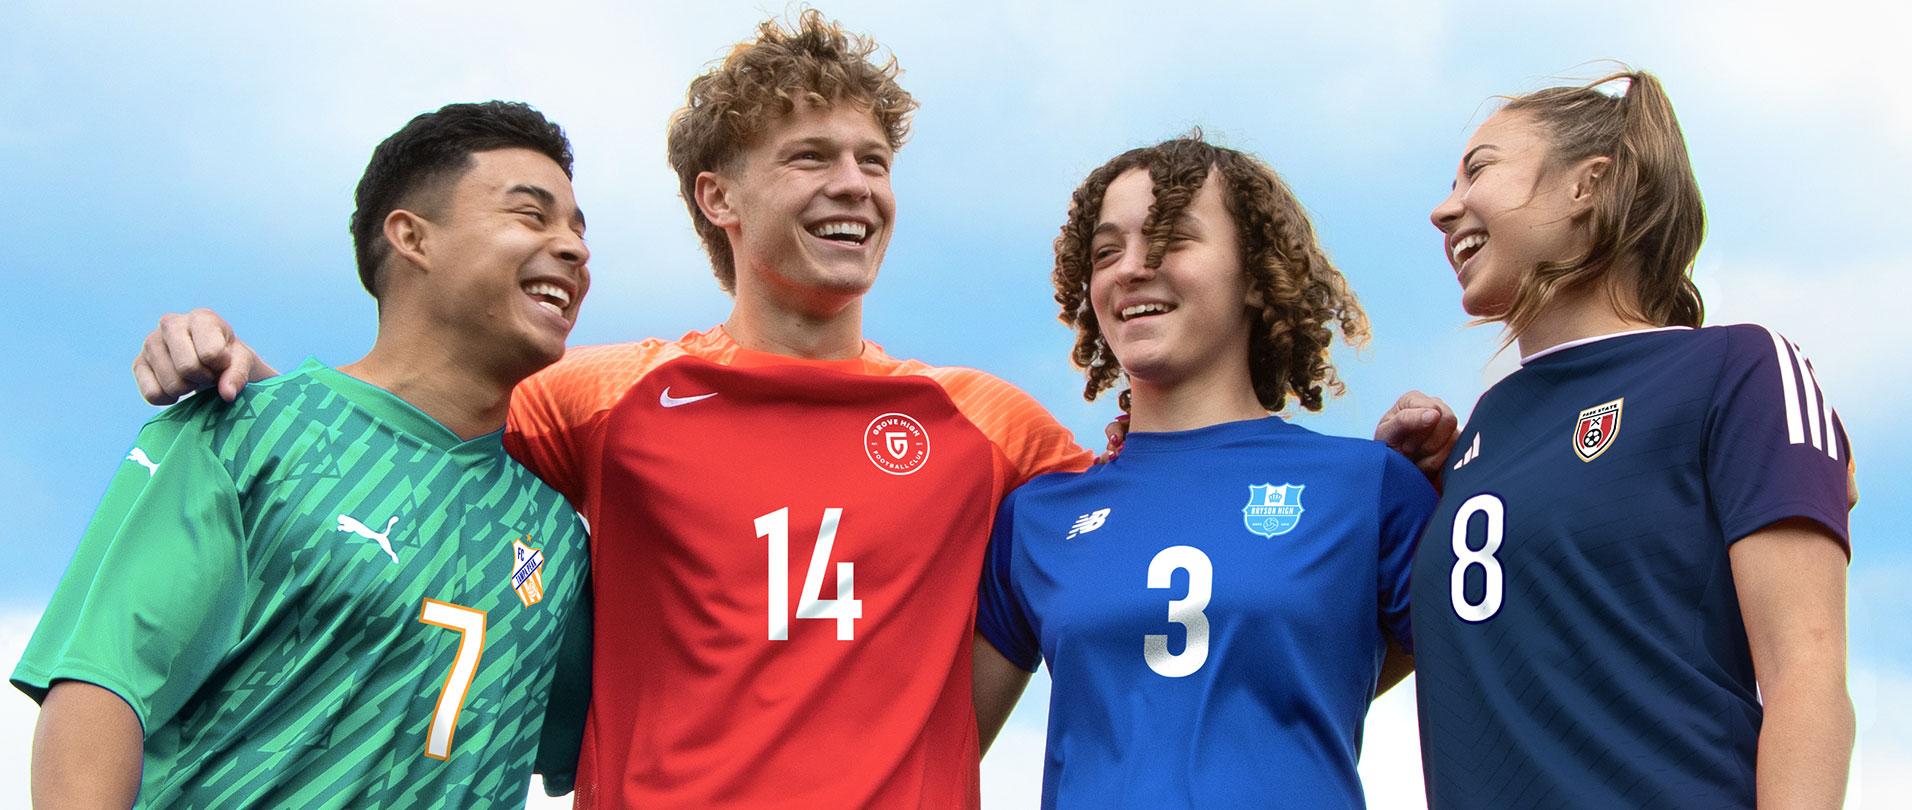 Men's Soccer Jerseys: Club, National Teams & More